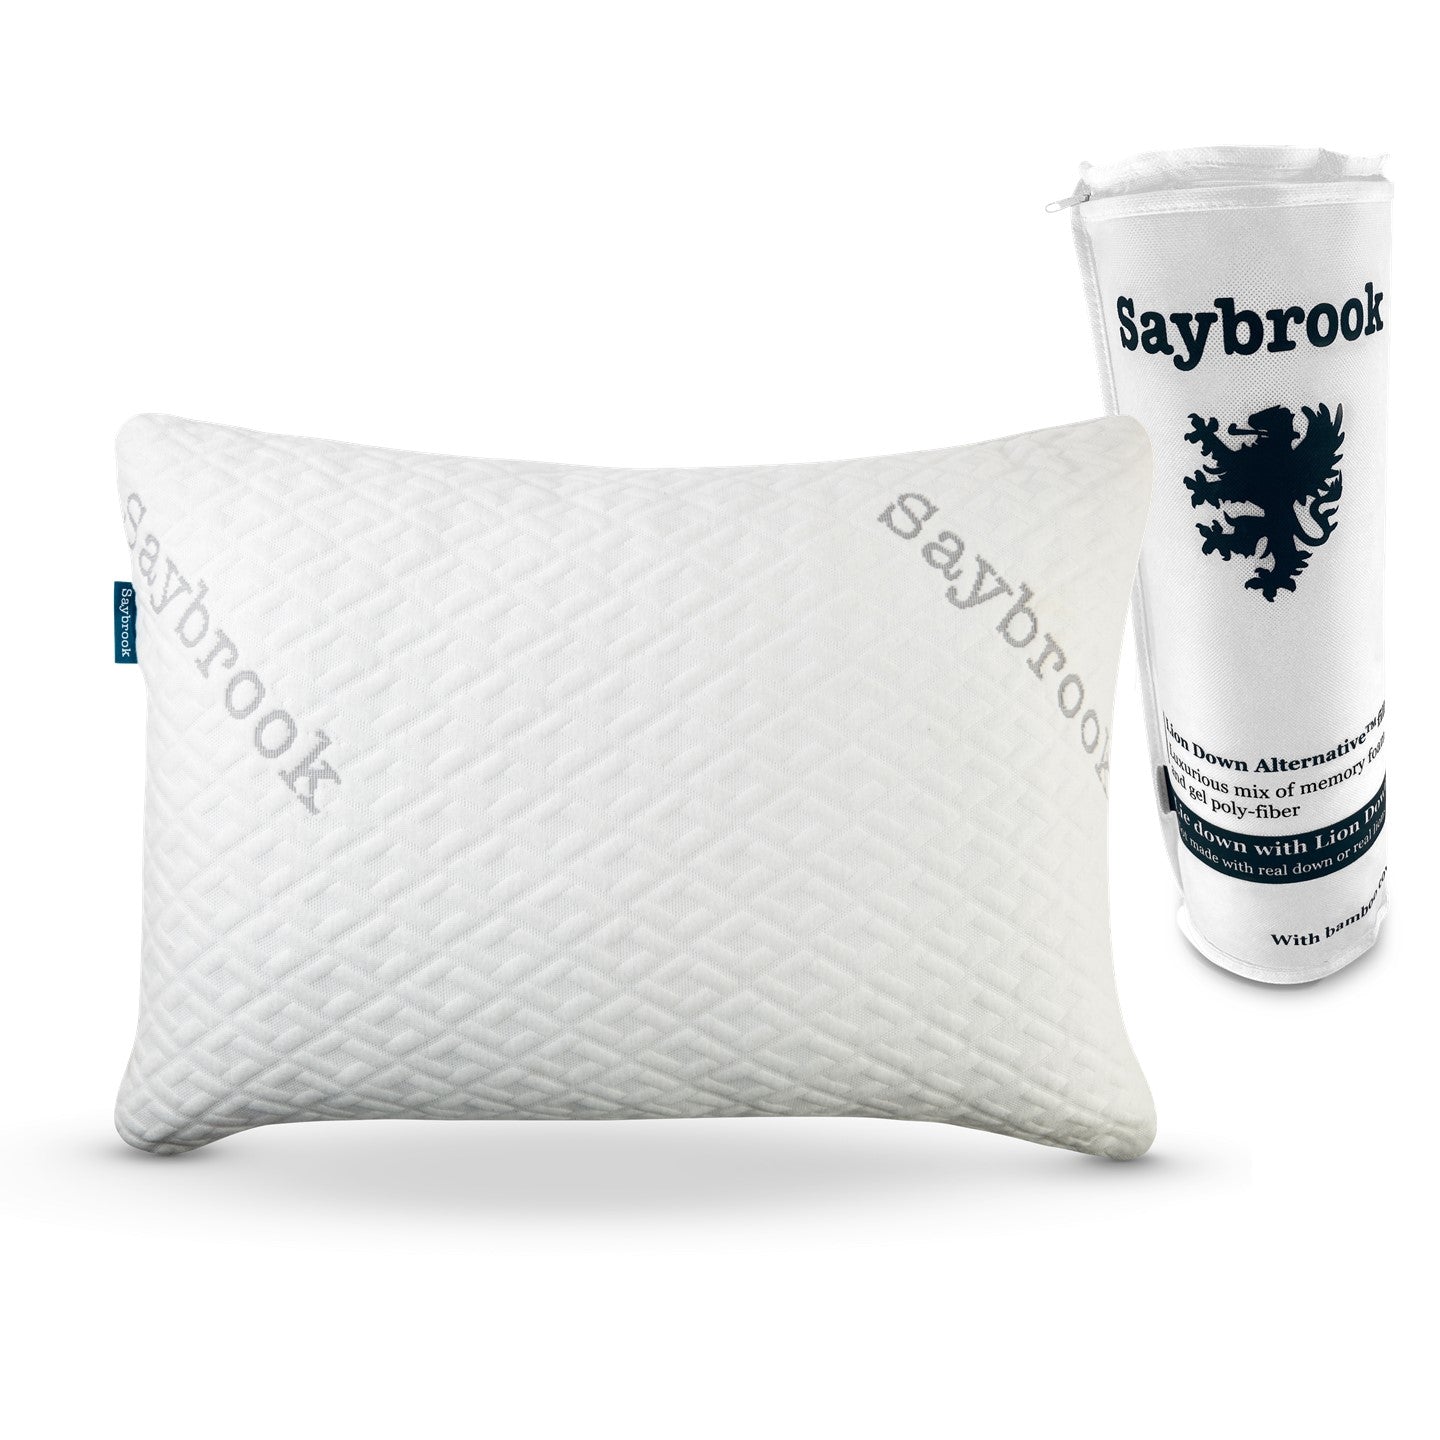 Memory Foam Neck Pillow - Adjustable Thickness for Best Comfort, Dark Blue